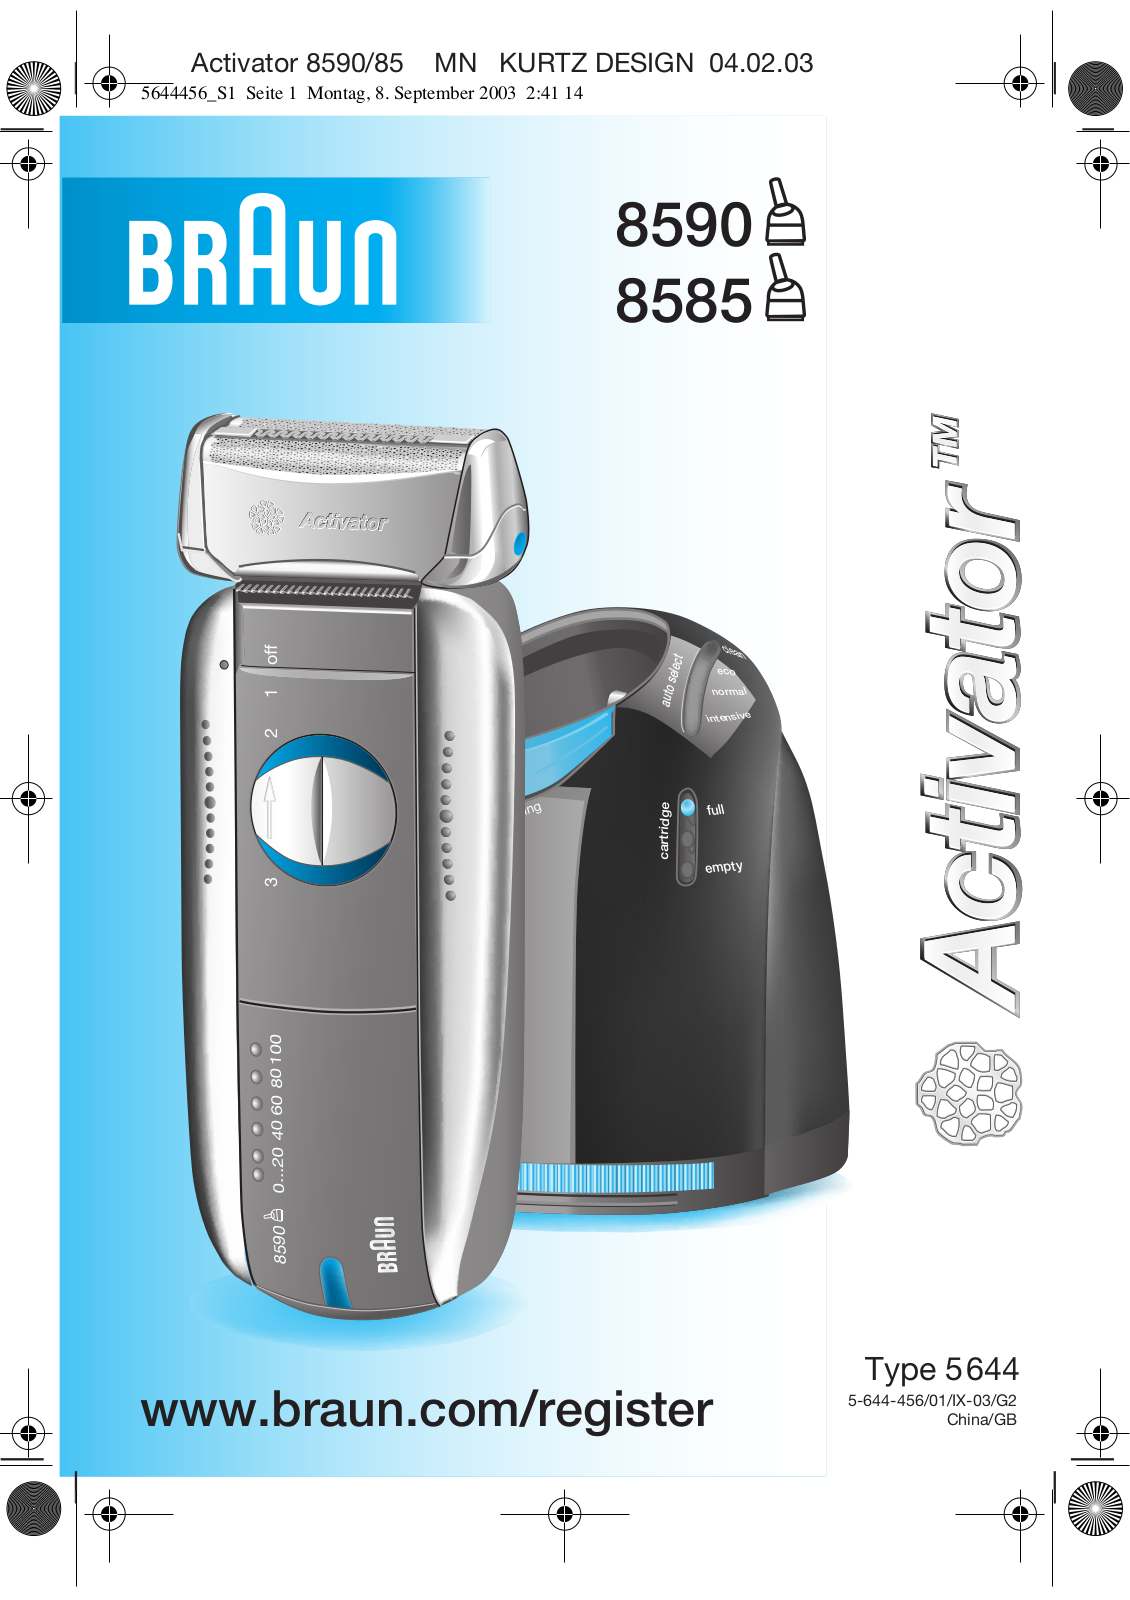 Braun 5644 User Manual